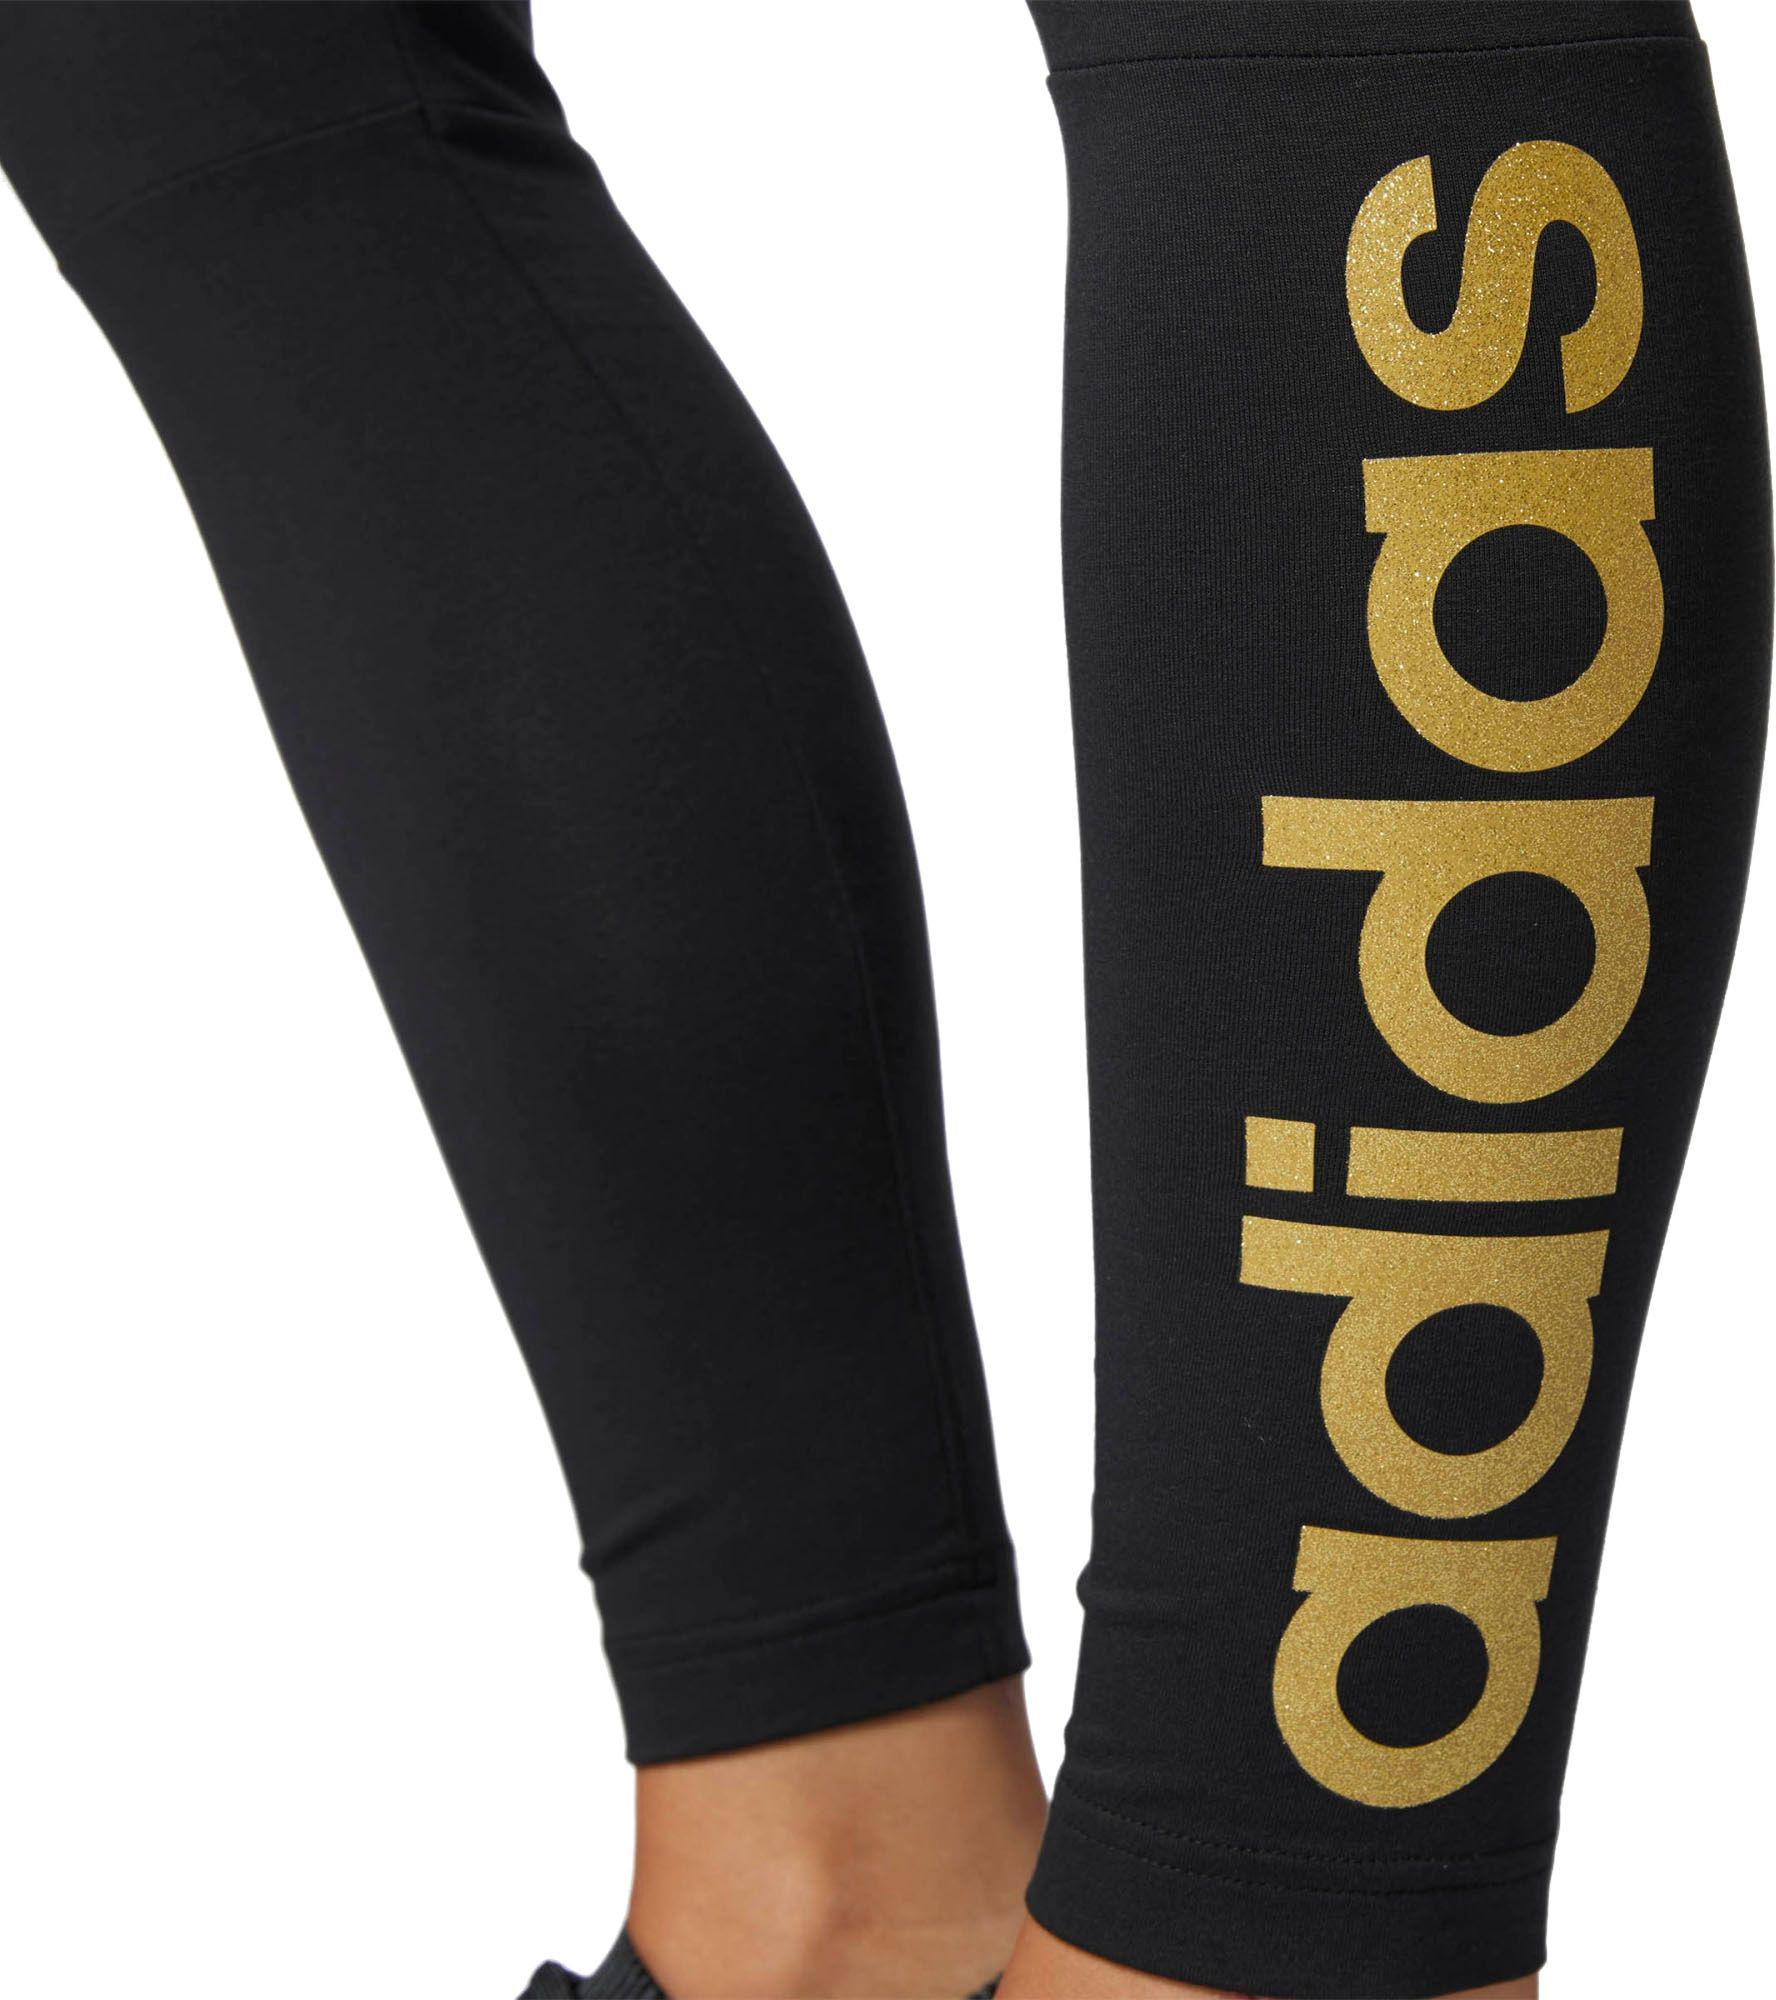 adidas black and gold leggings